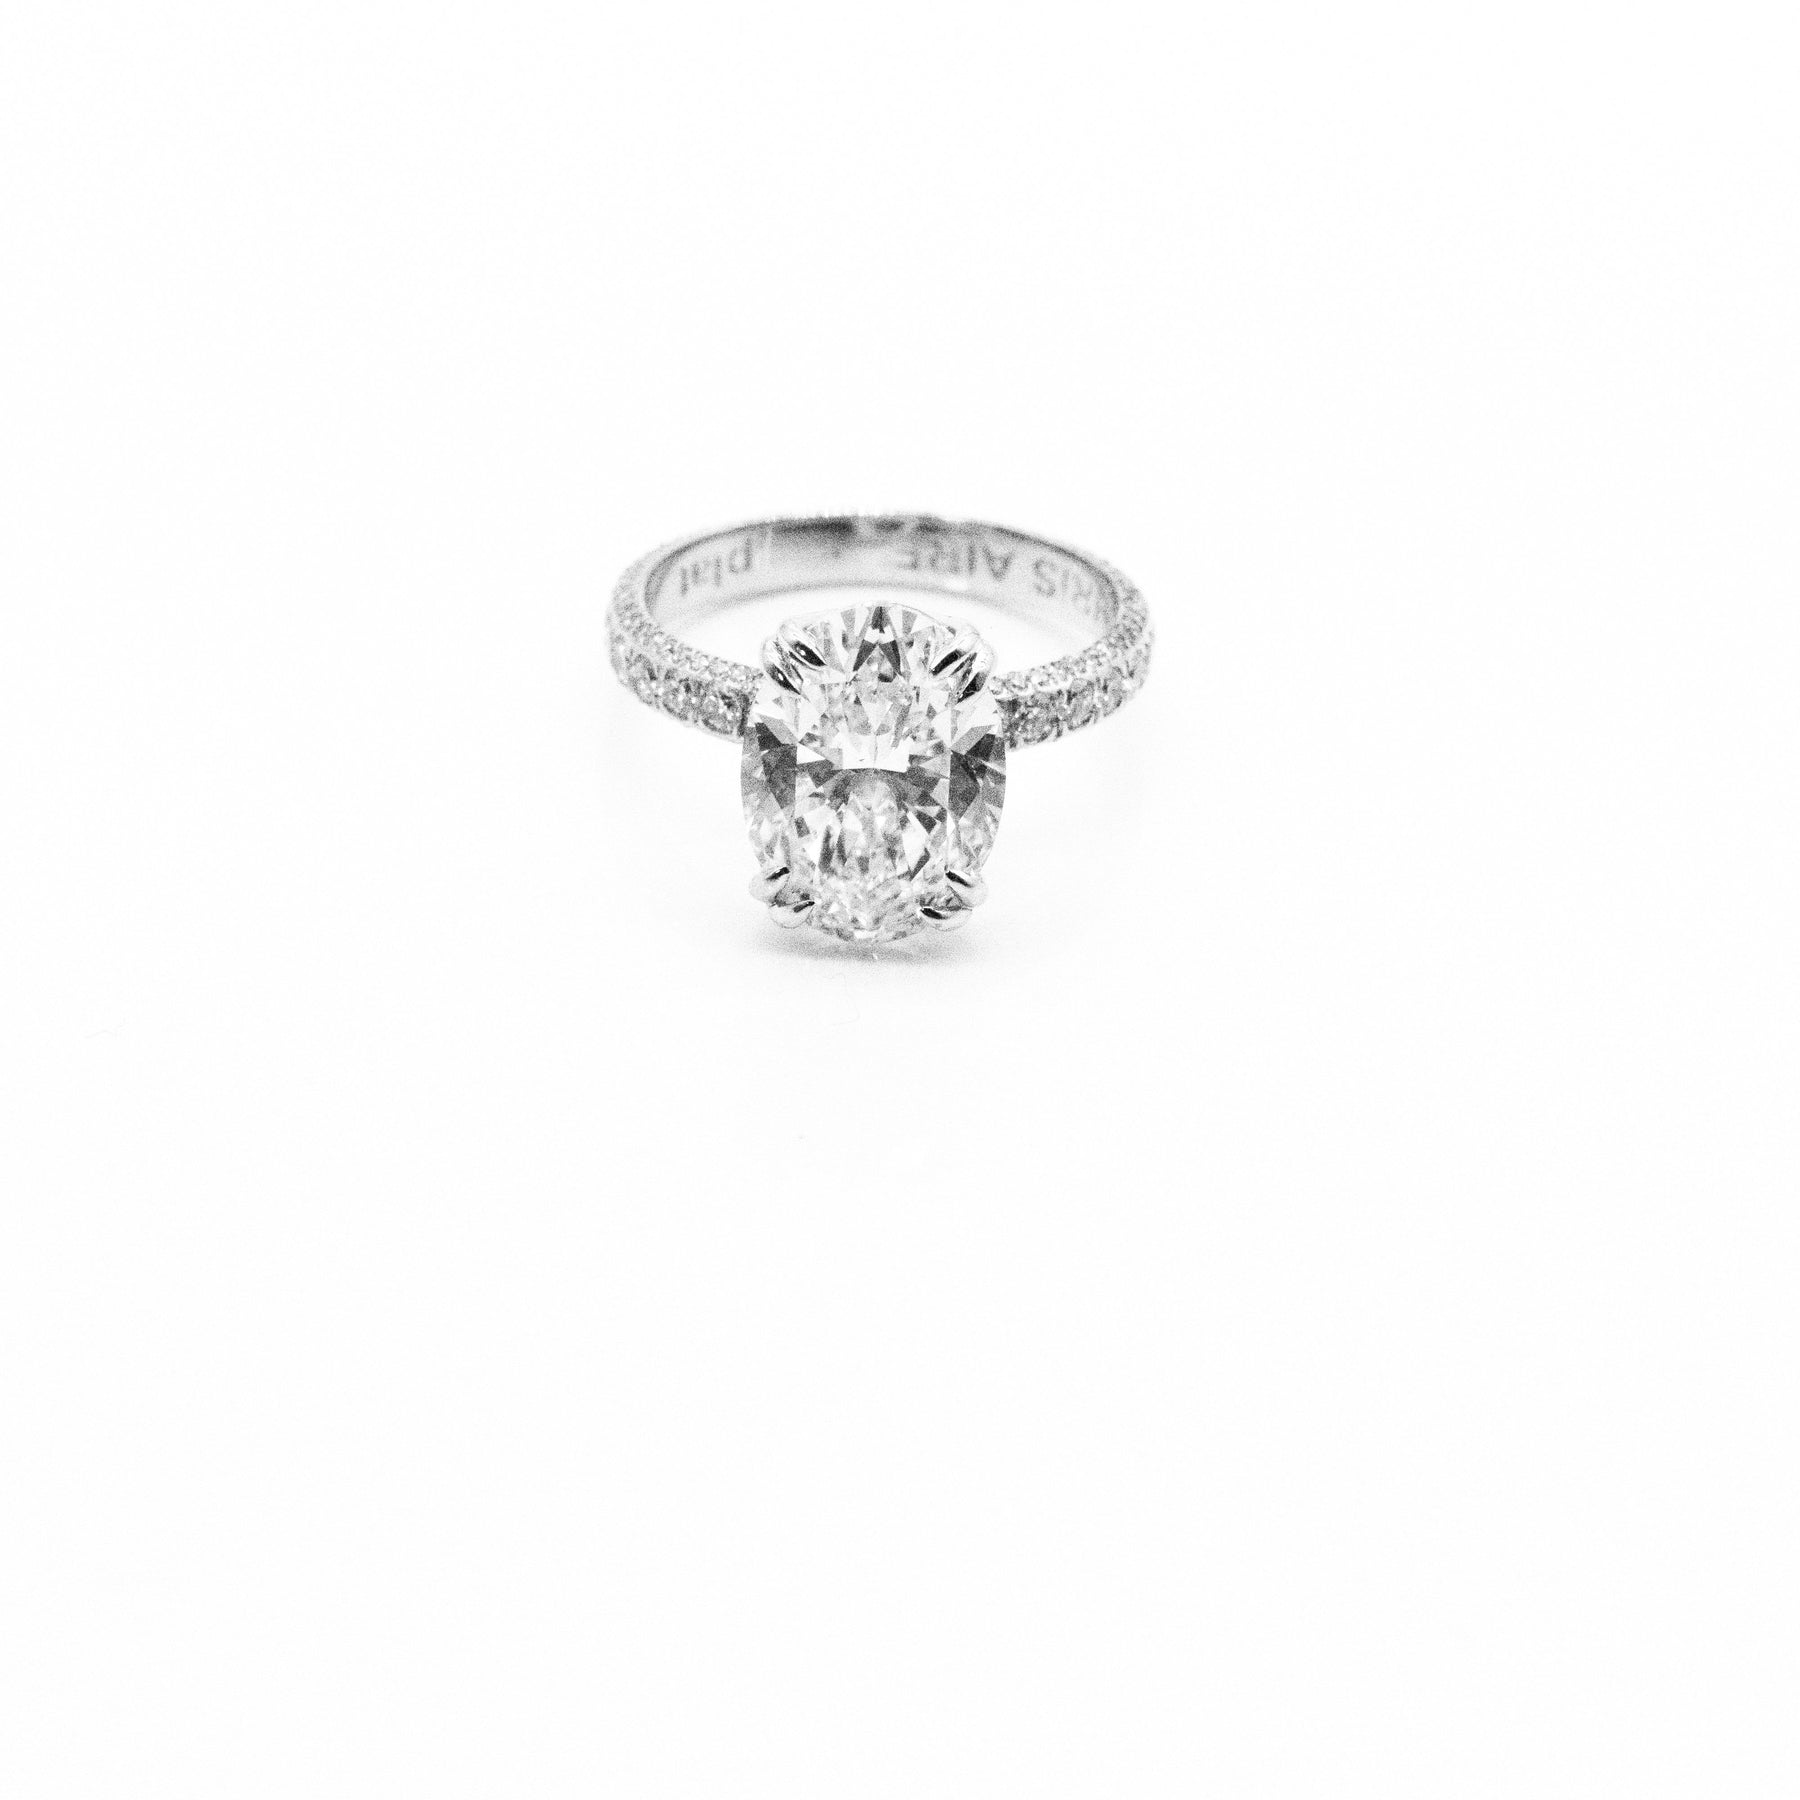 Engagement Ring - 6.15 Carat Oval Shaped Diamond Engagement Ring Set in Platinum